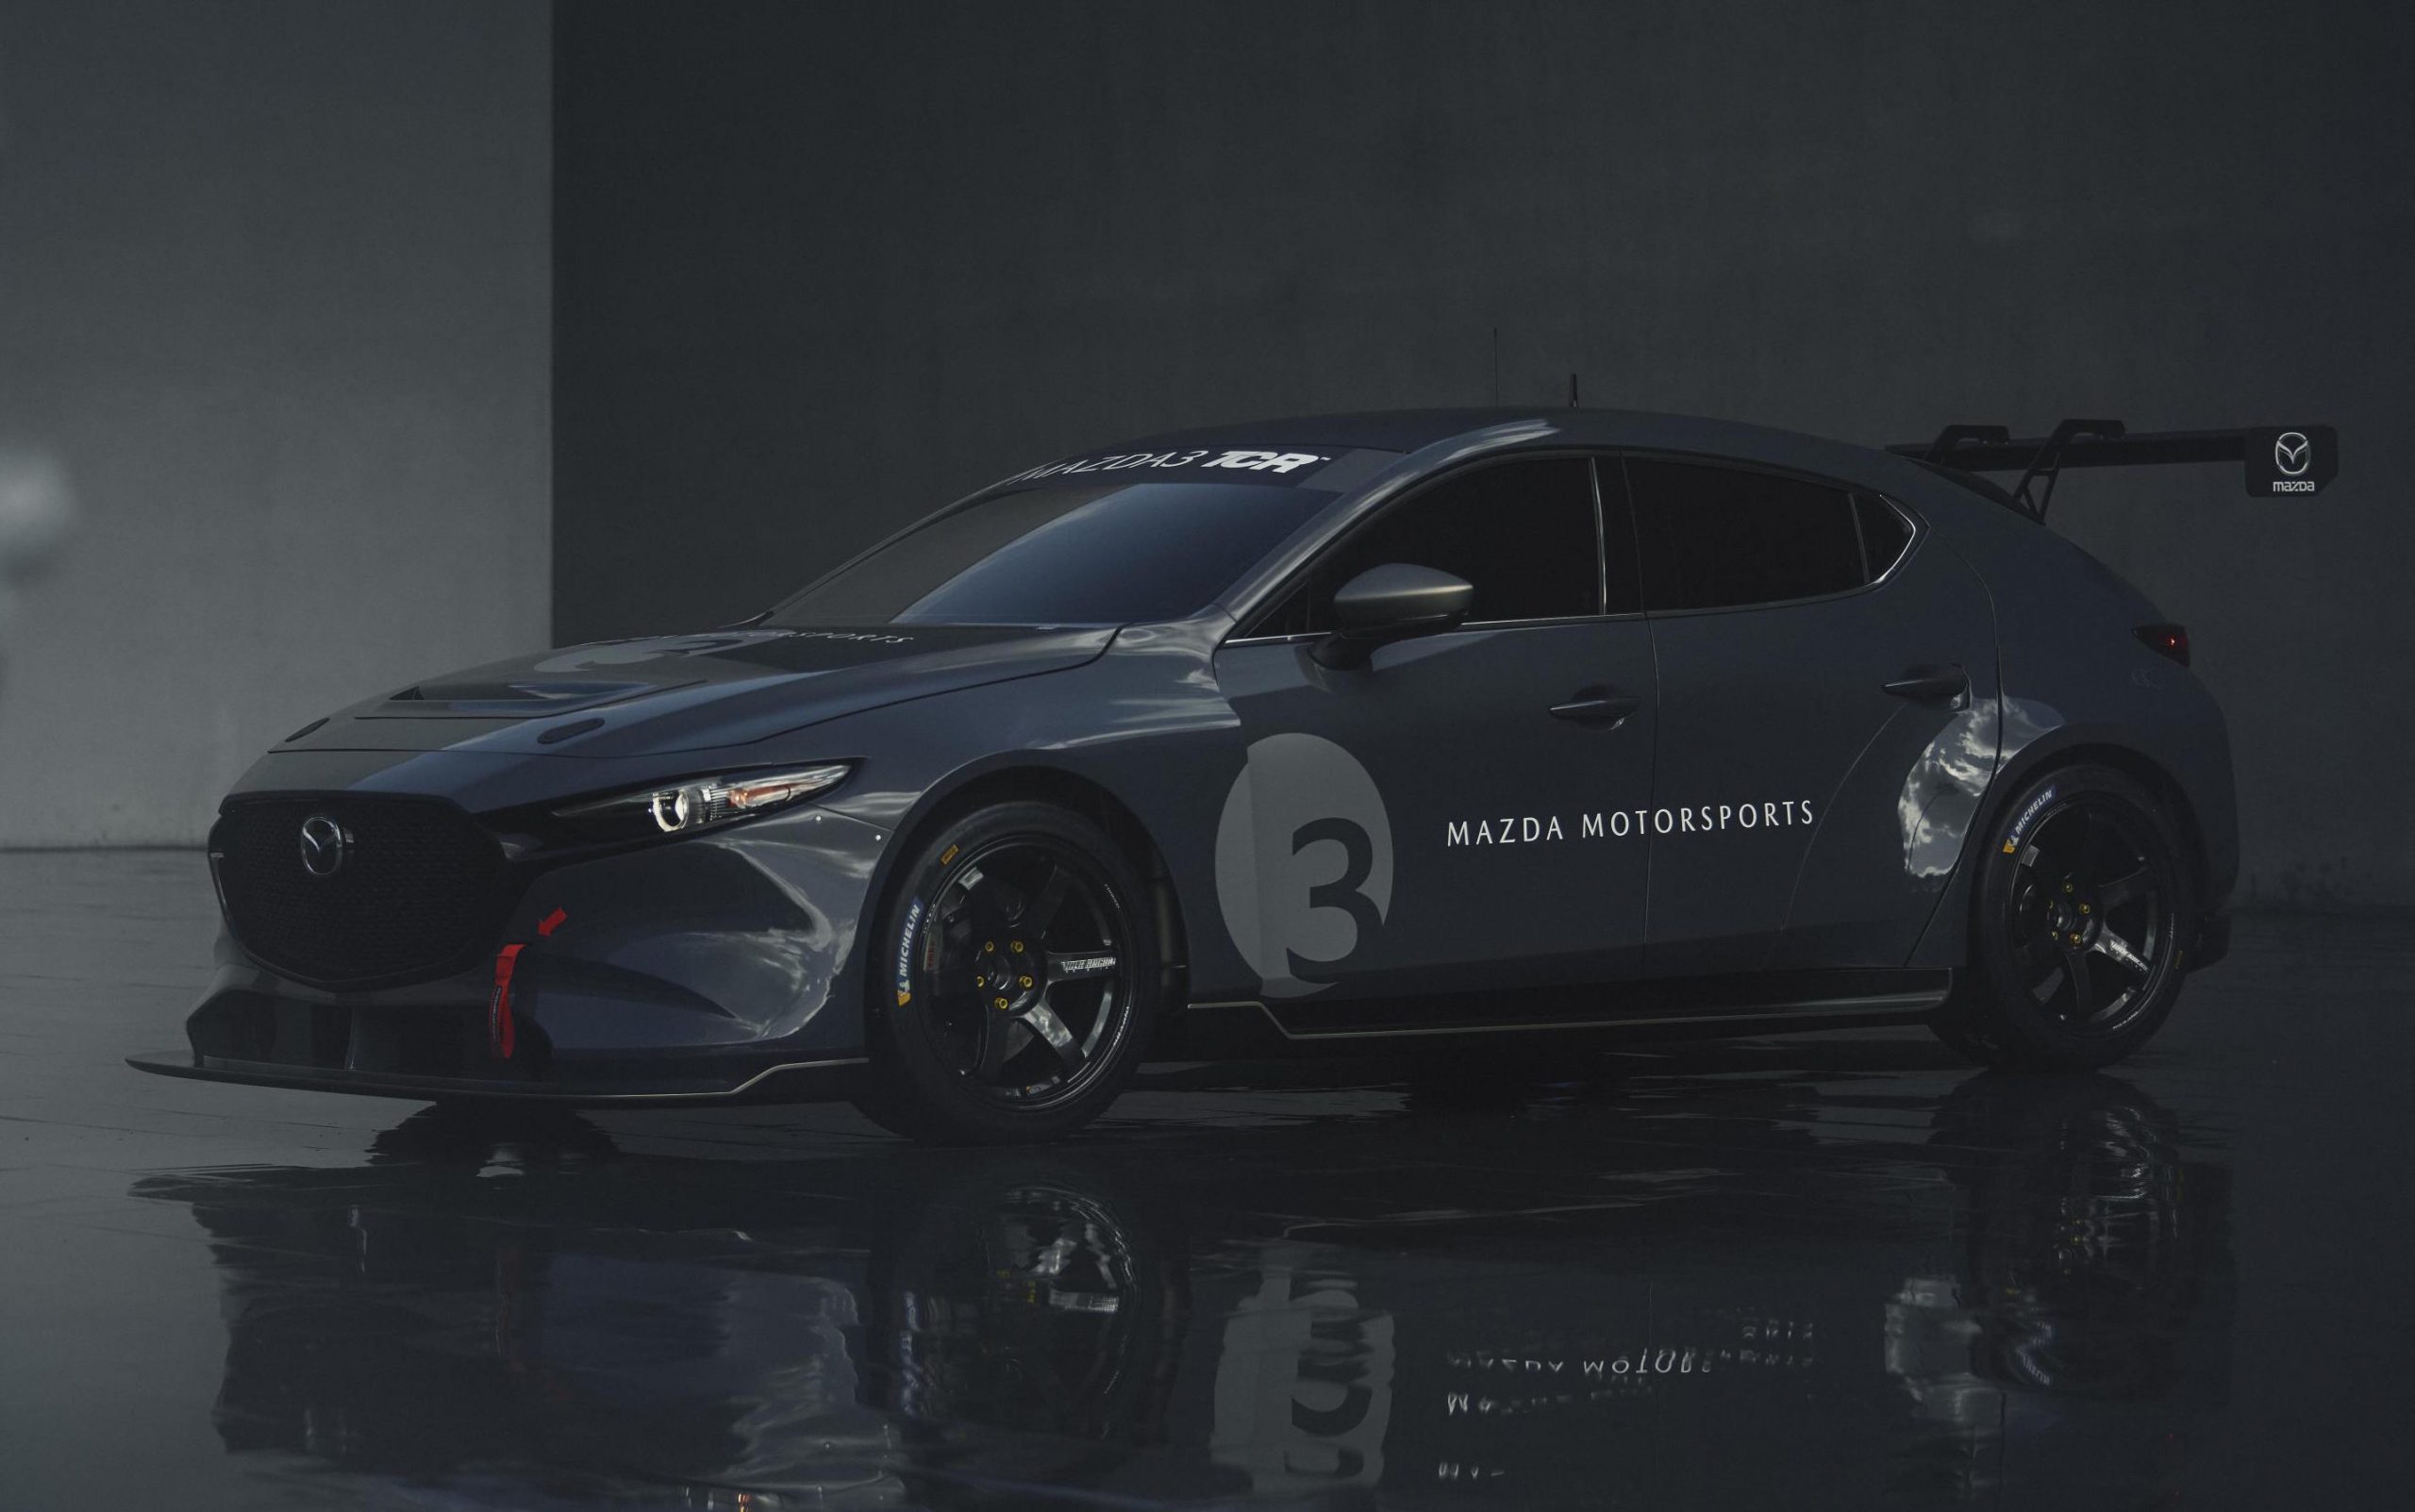 2020 Mazda3 TCR racing car unveiled